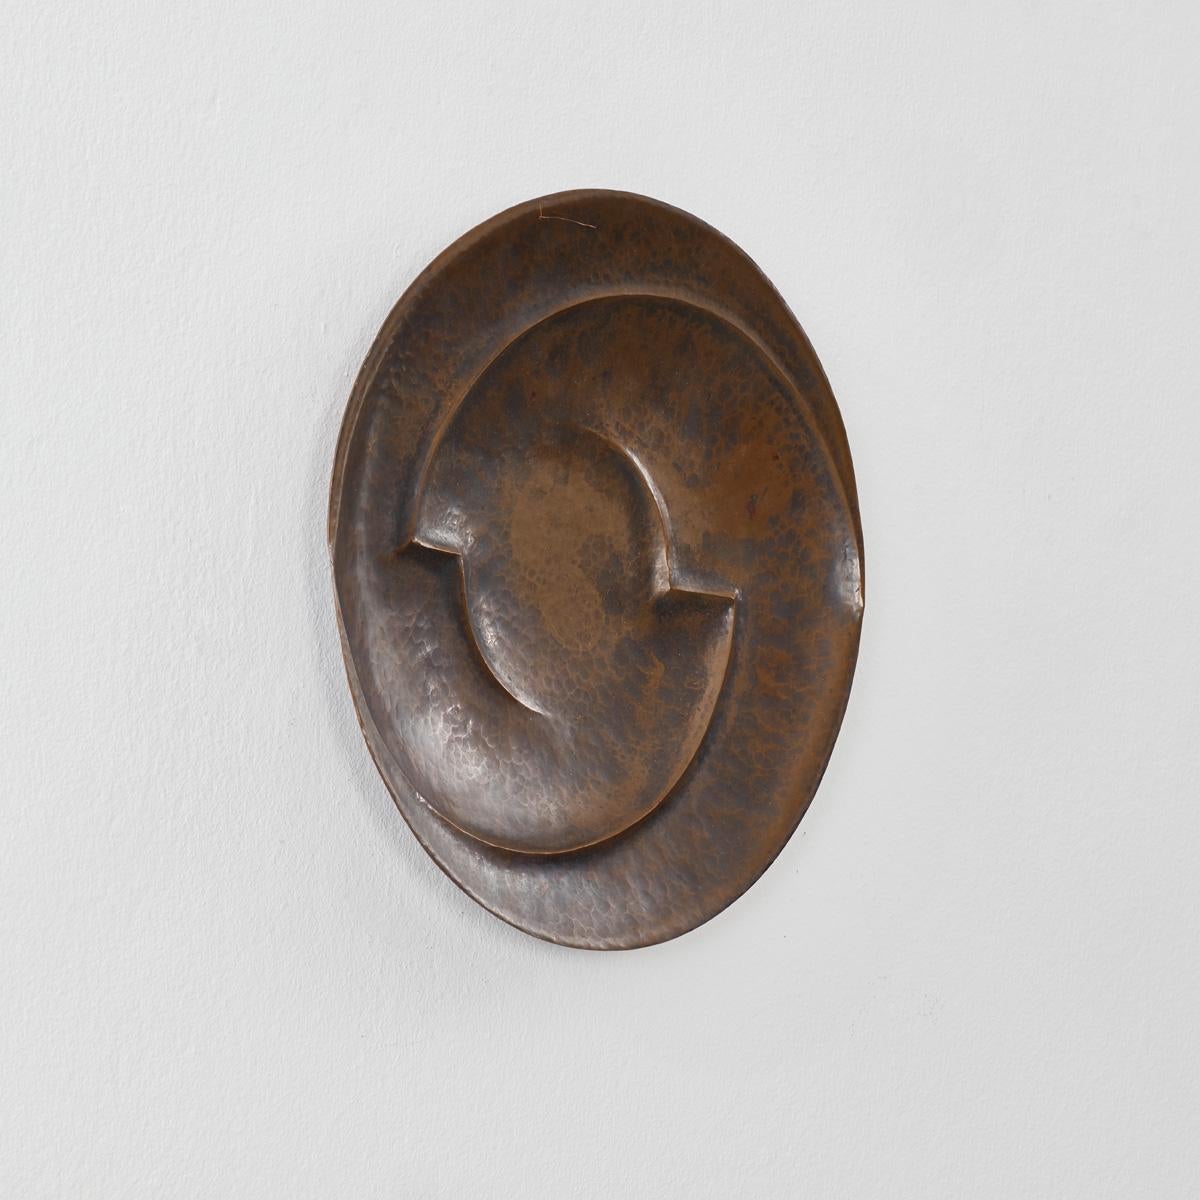 An Art Deco hammered copper plate from an unknown Dutch art school.